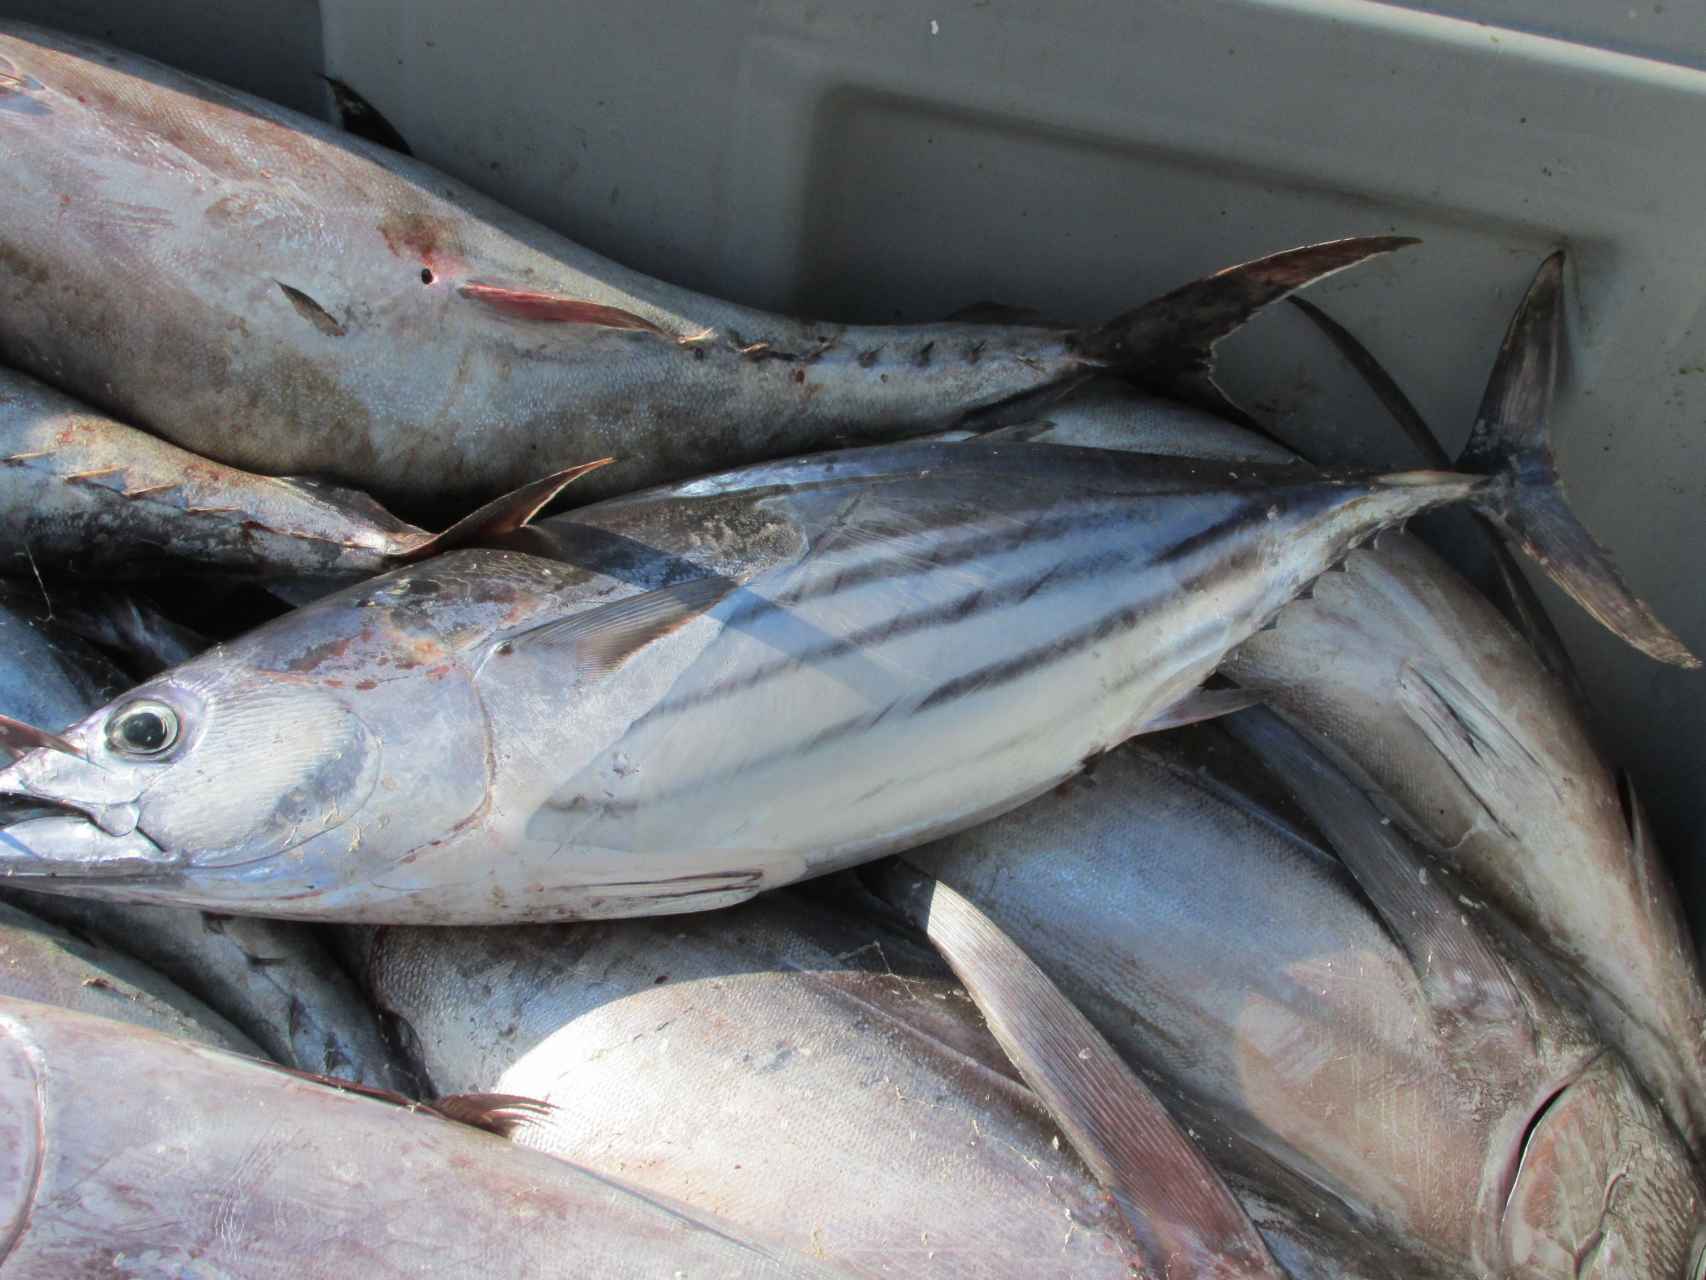 Estos son algunos pescados servidos con etiquetado fraudulento